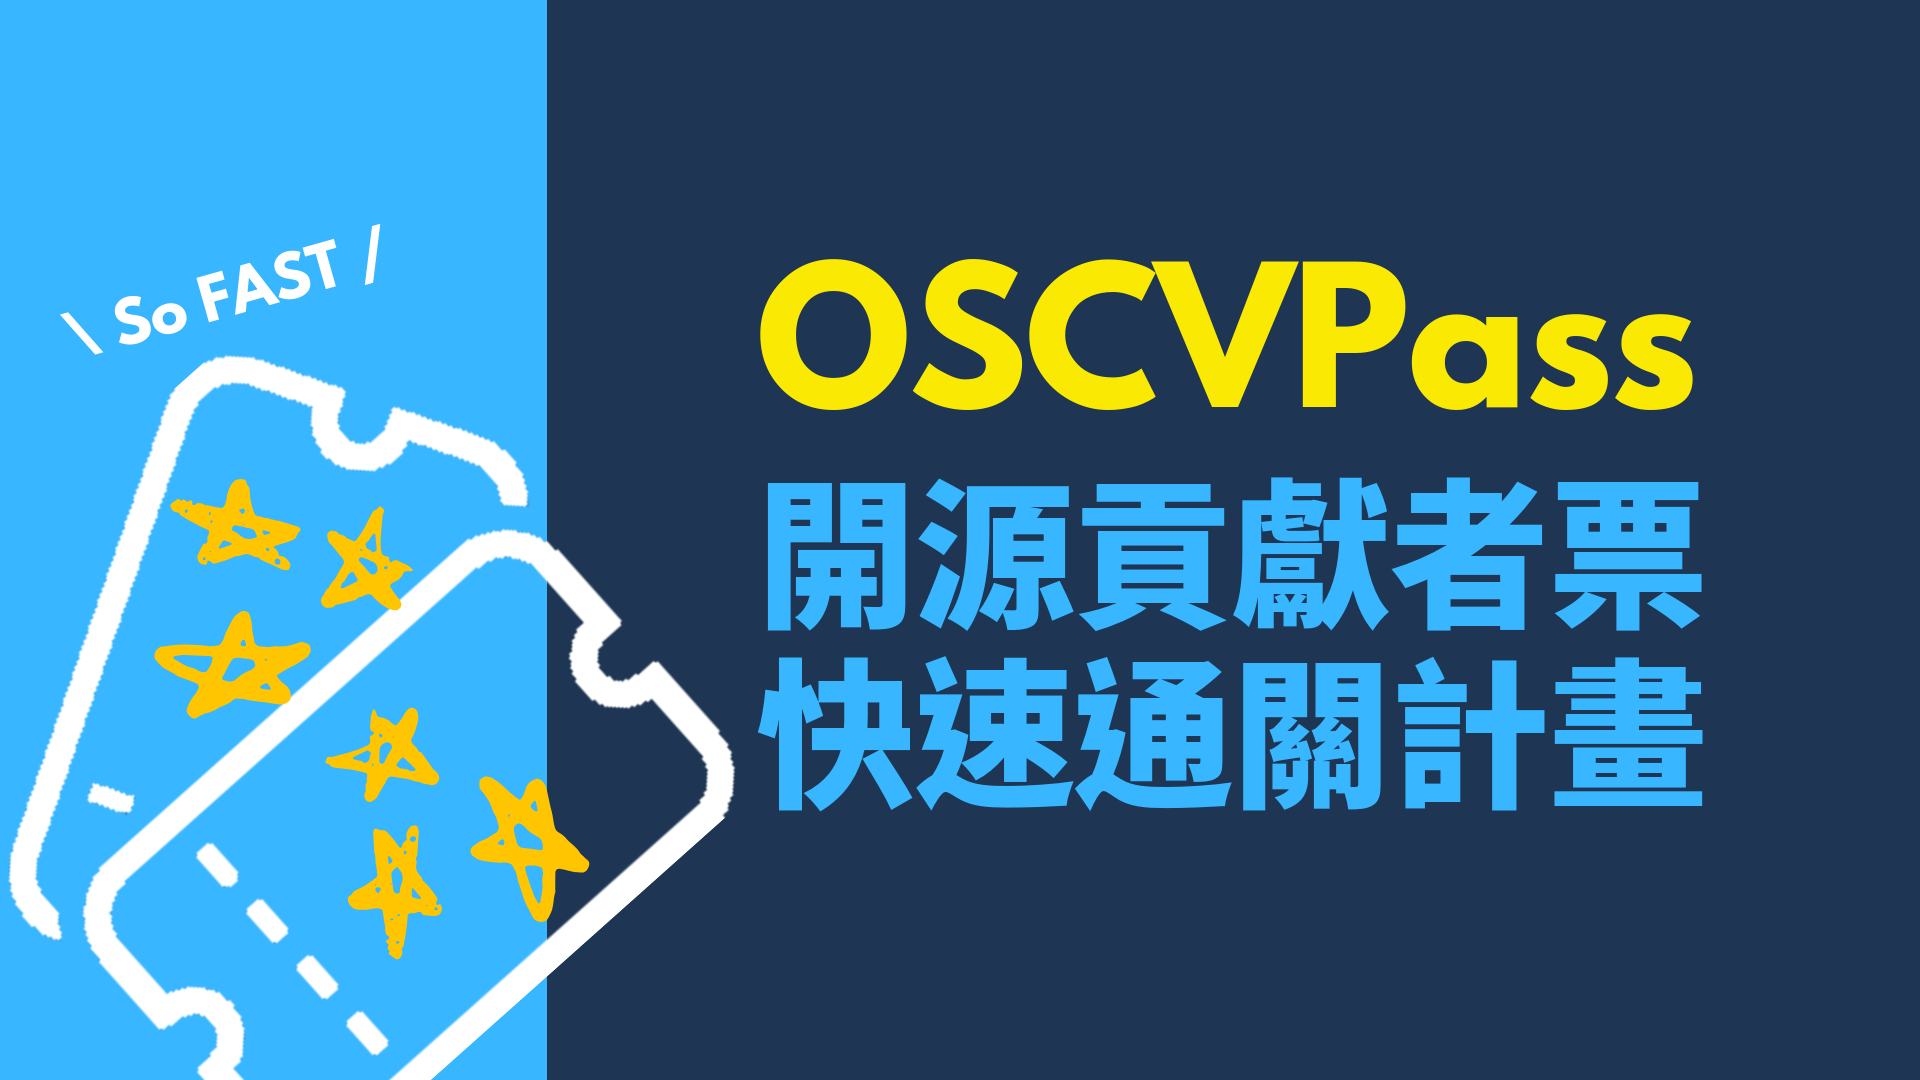 Visual identity image for 'OSCVPass'